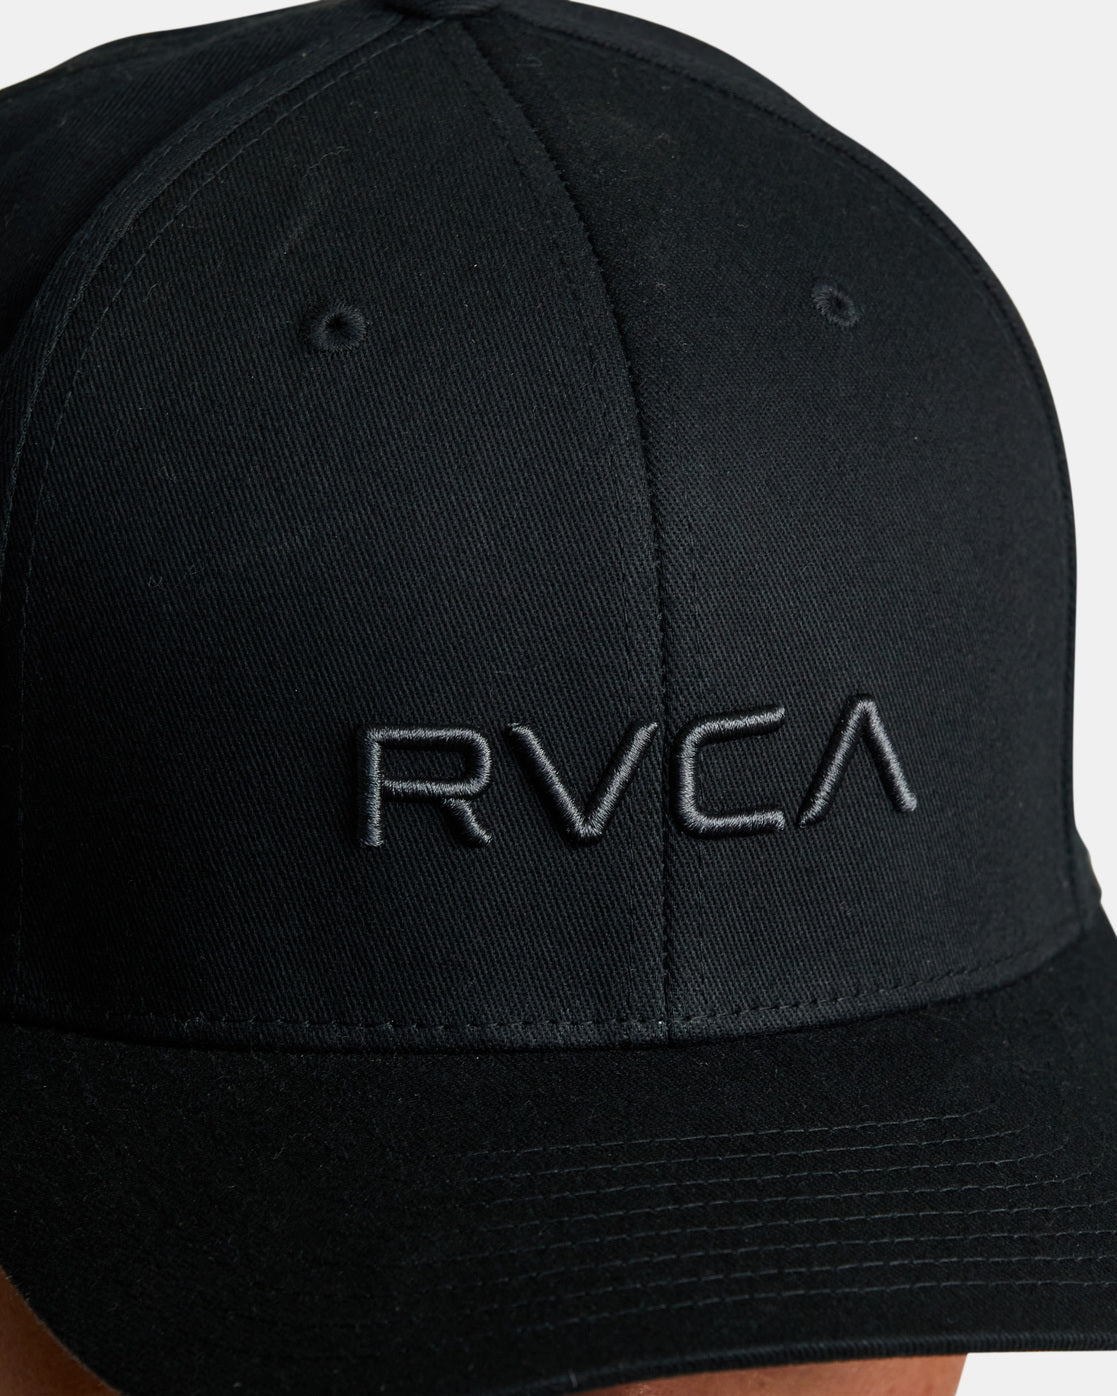 RVCA Flex Fit Hat - Black – RVCA.com